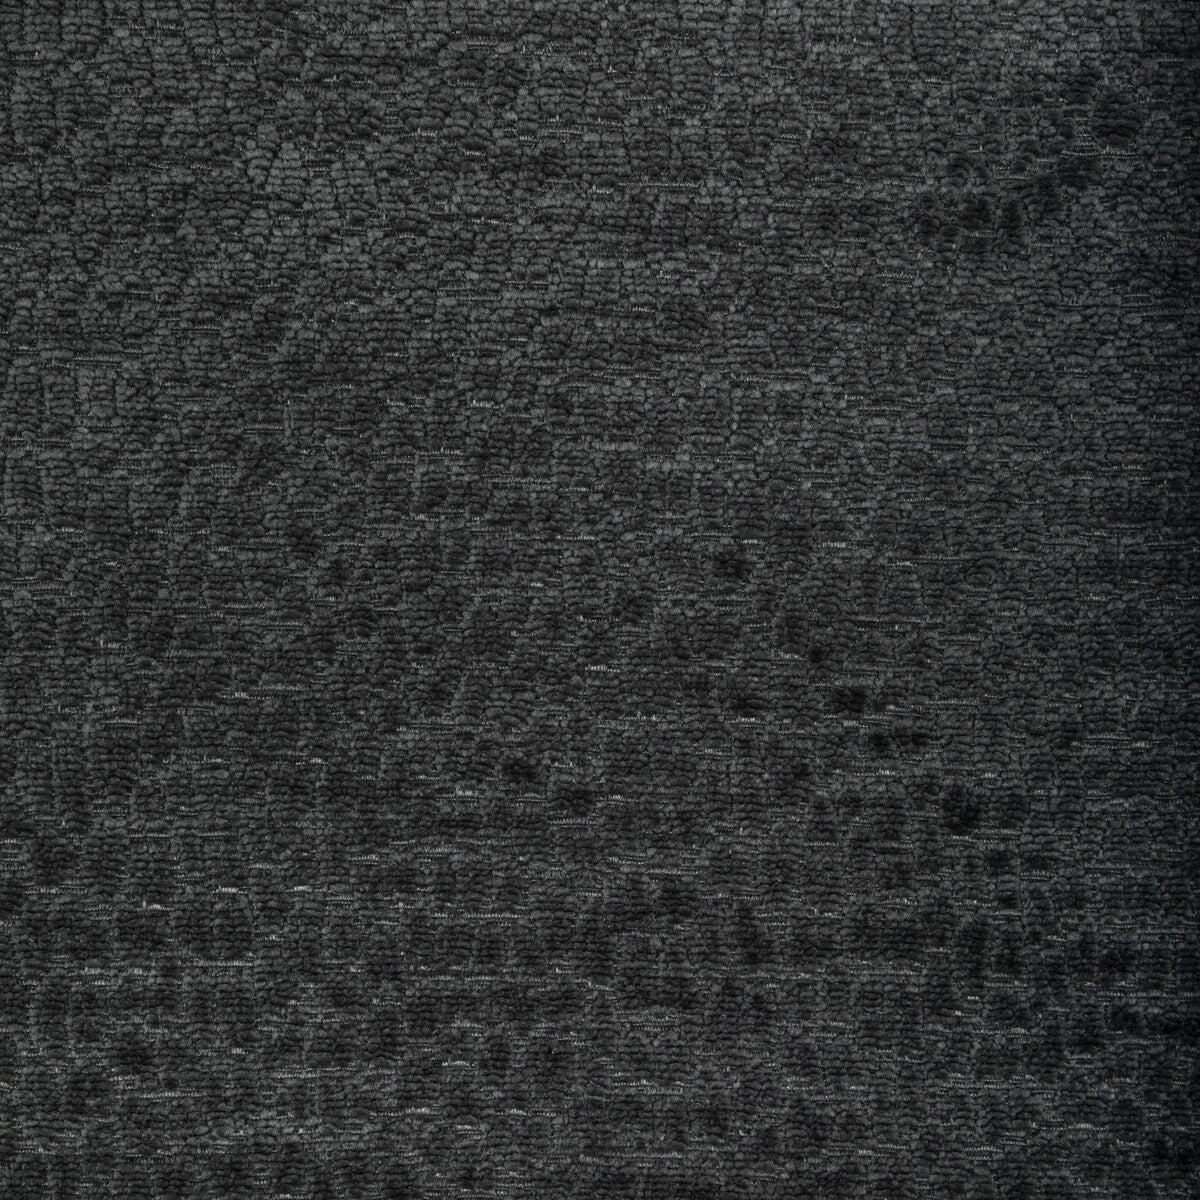 Kravet Smart fabric in 36606-2121 color - pattern 36606.2121.0 - by Kravet Smart in the Performance Kravetarmor collection